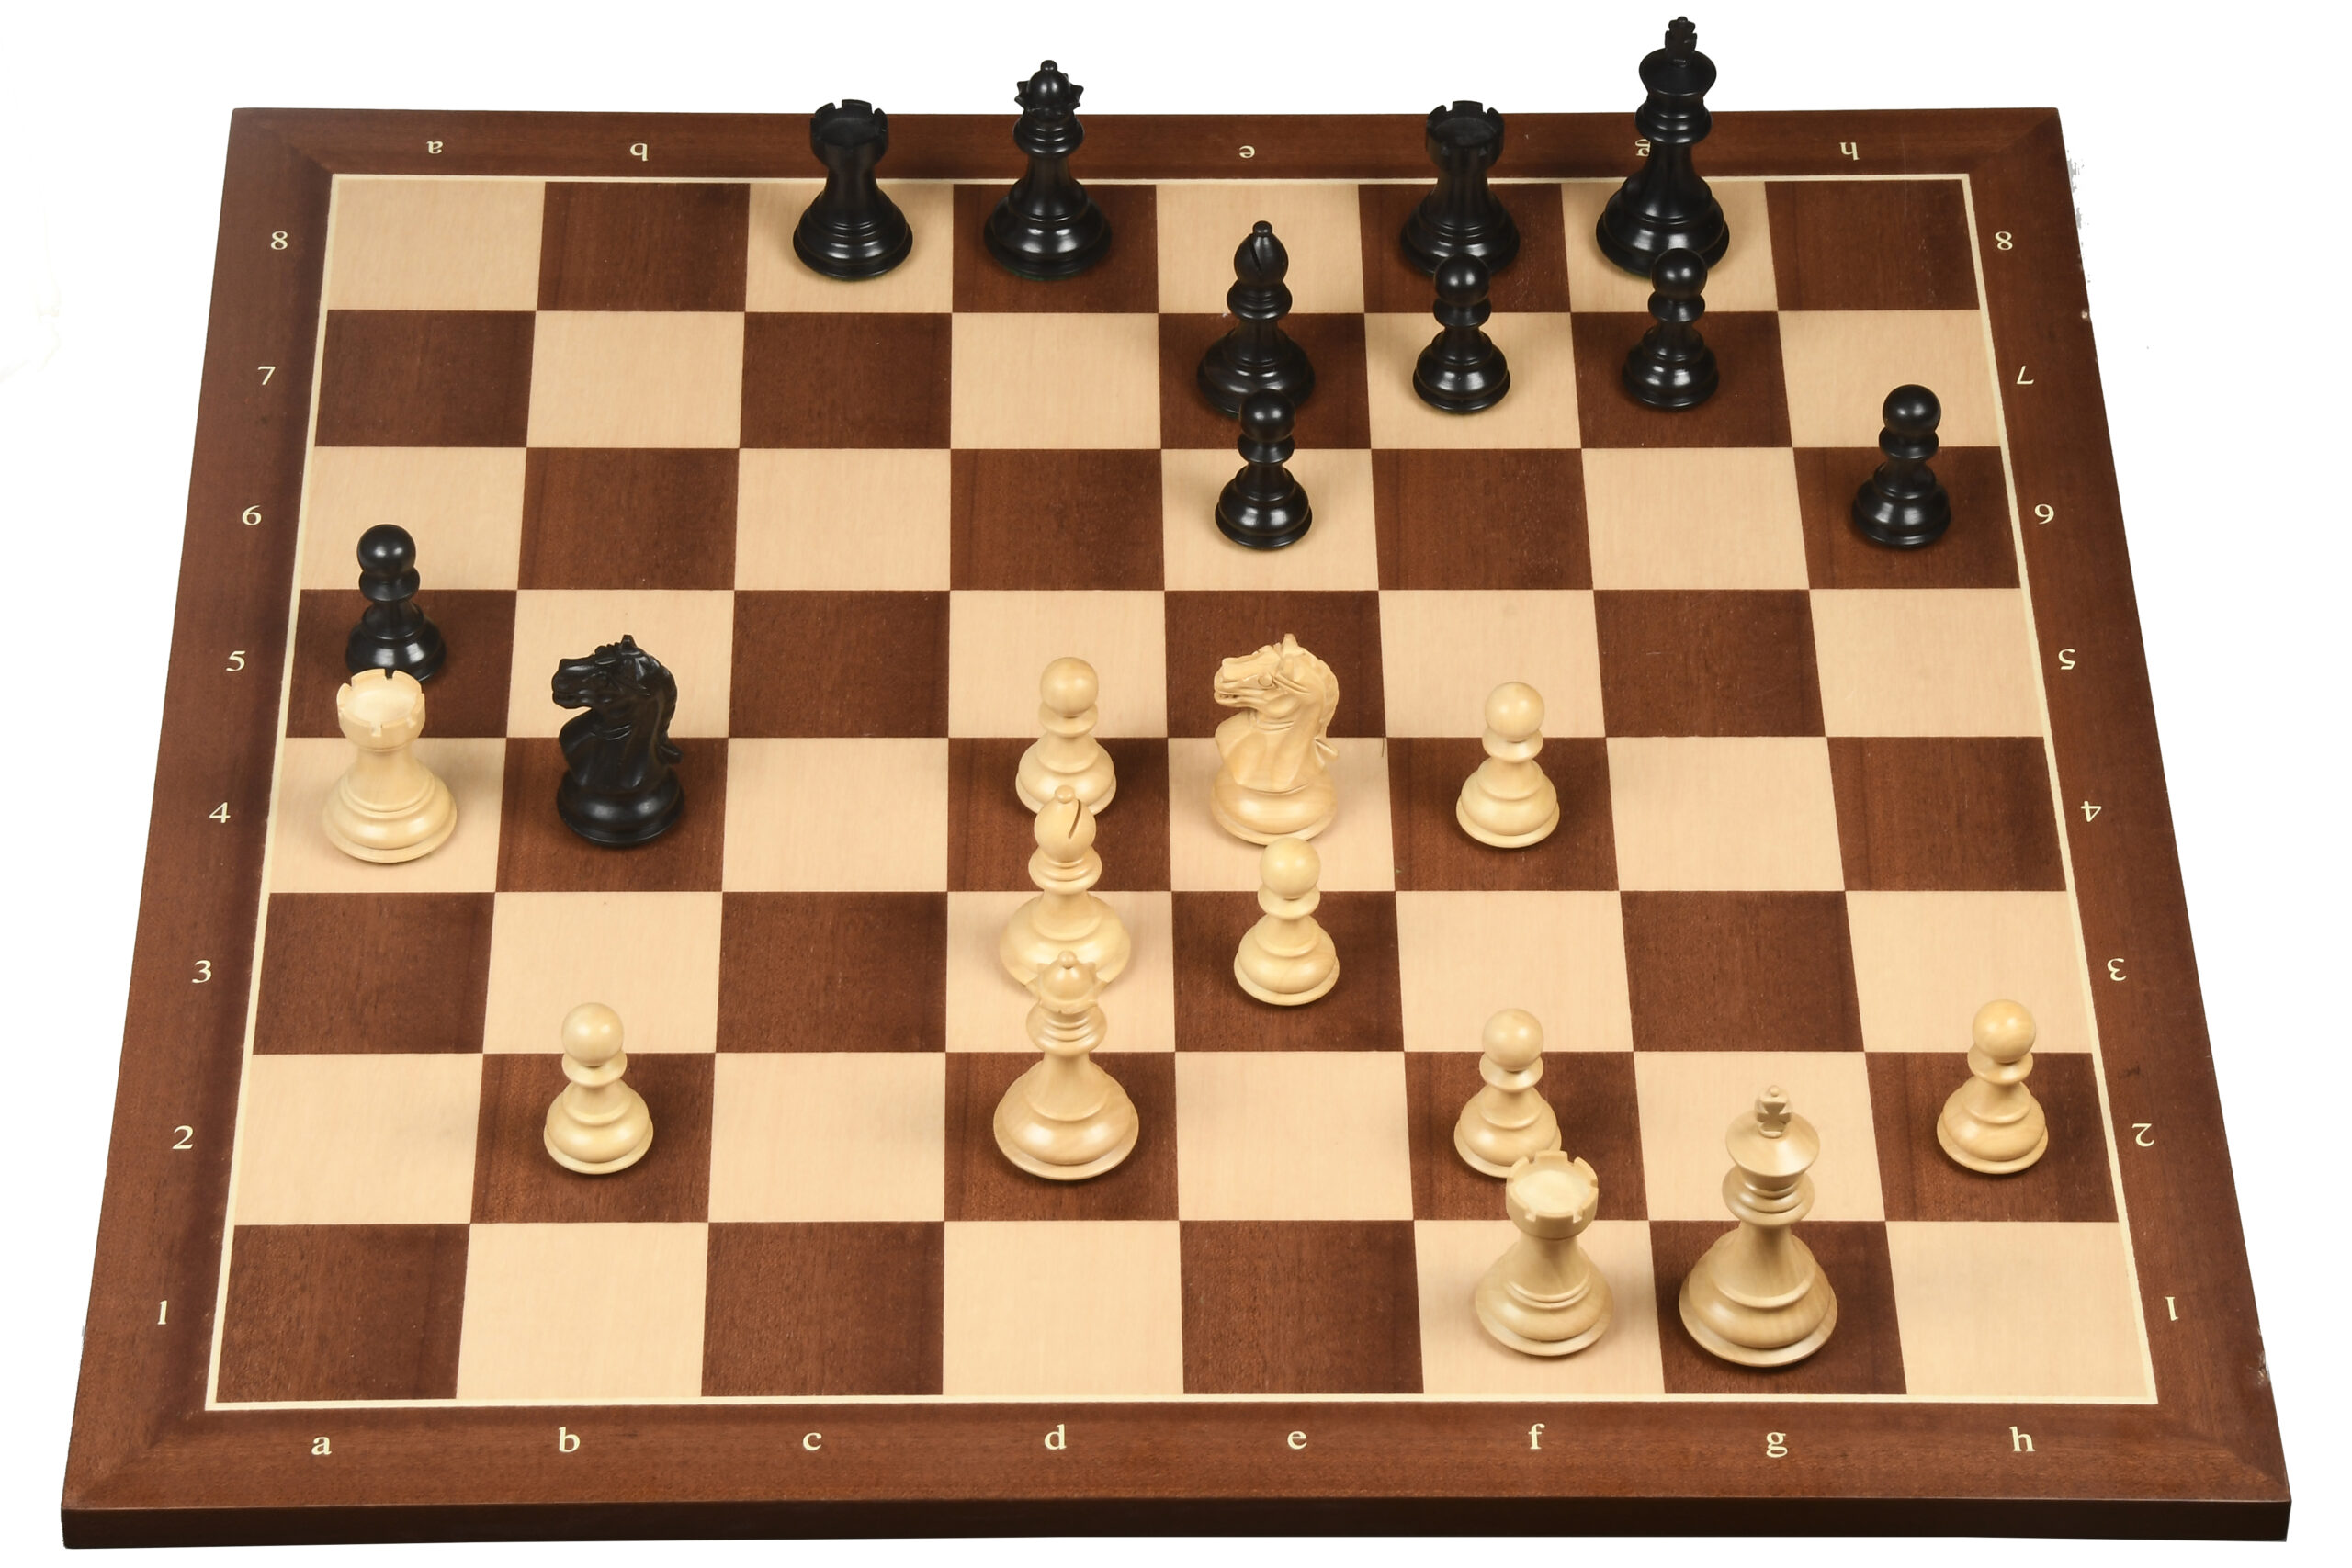 Mastering Queen's Gambit Declined as Black 